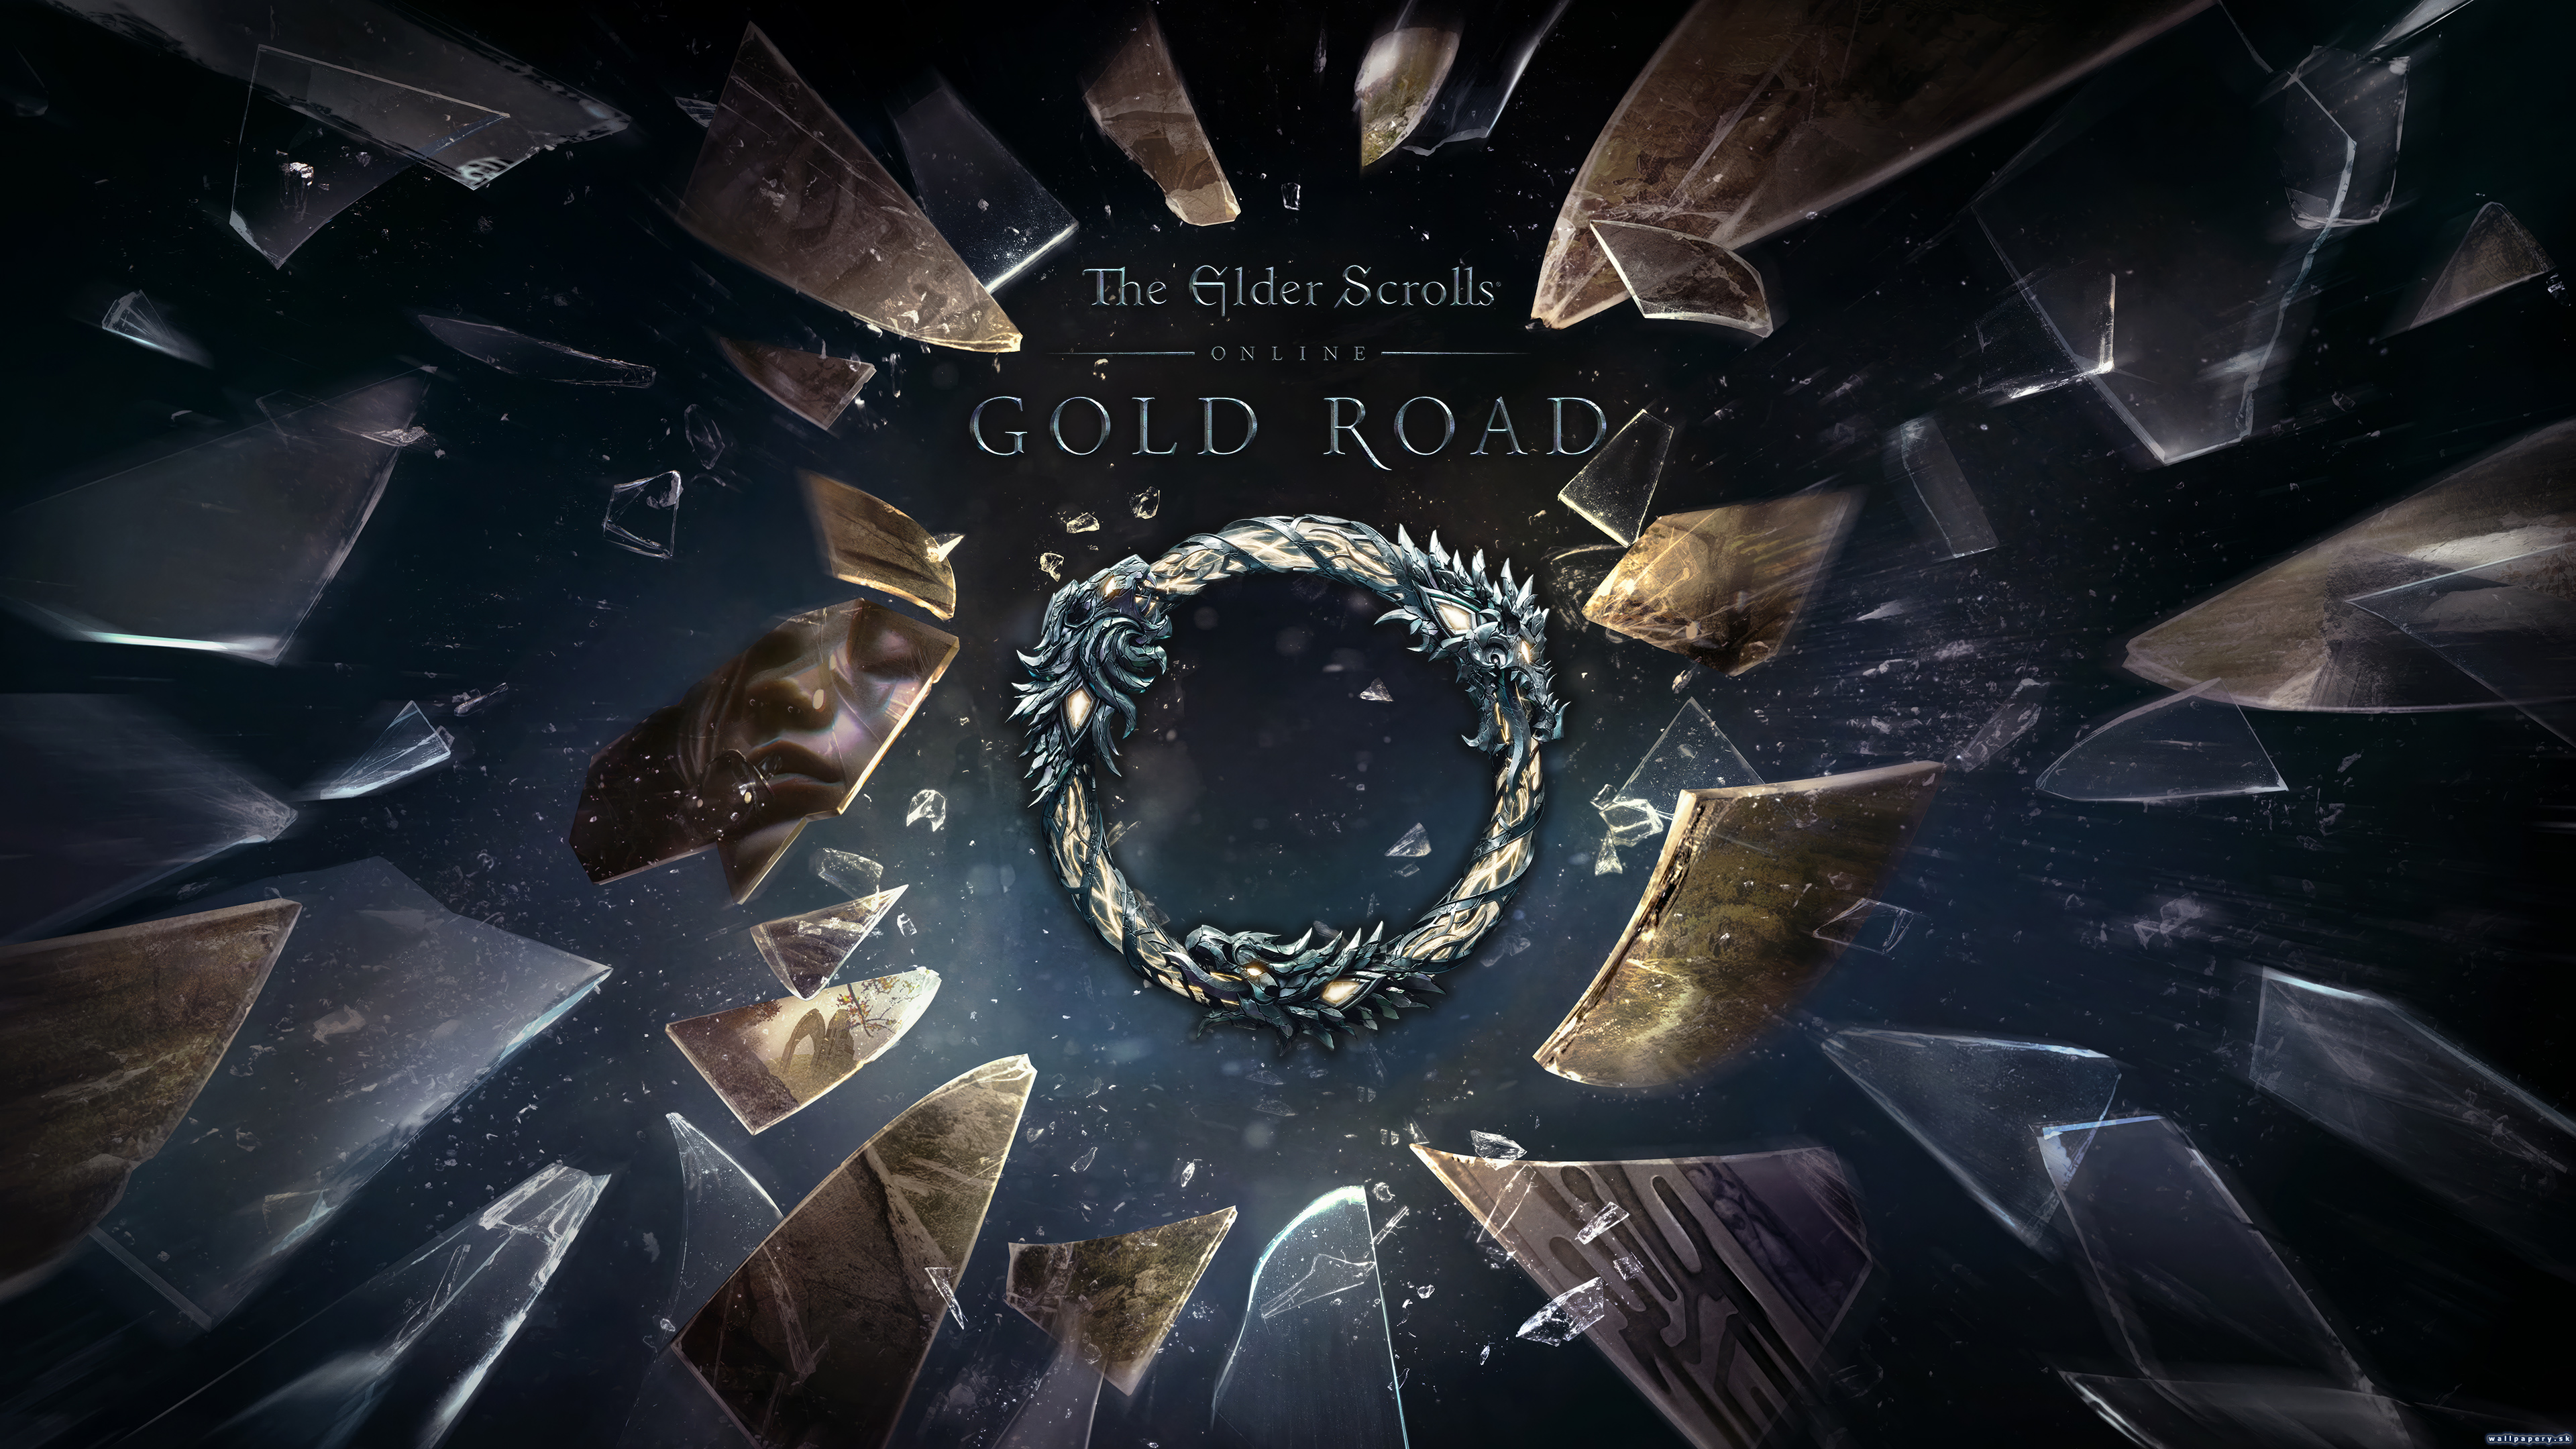 The Elder Scrolls Online: Gold Road - wallpaper 2